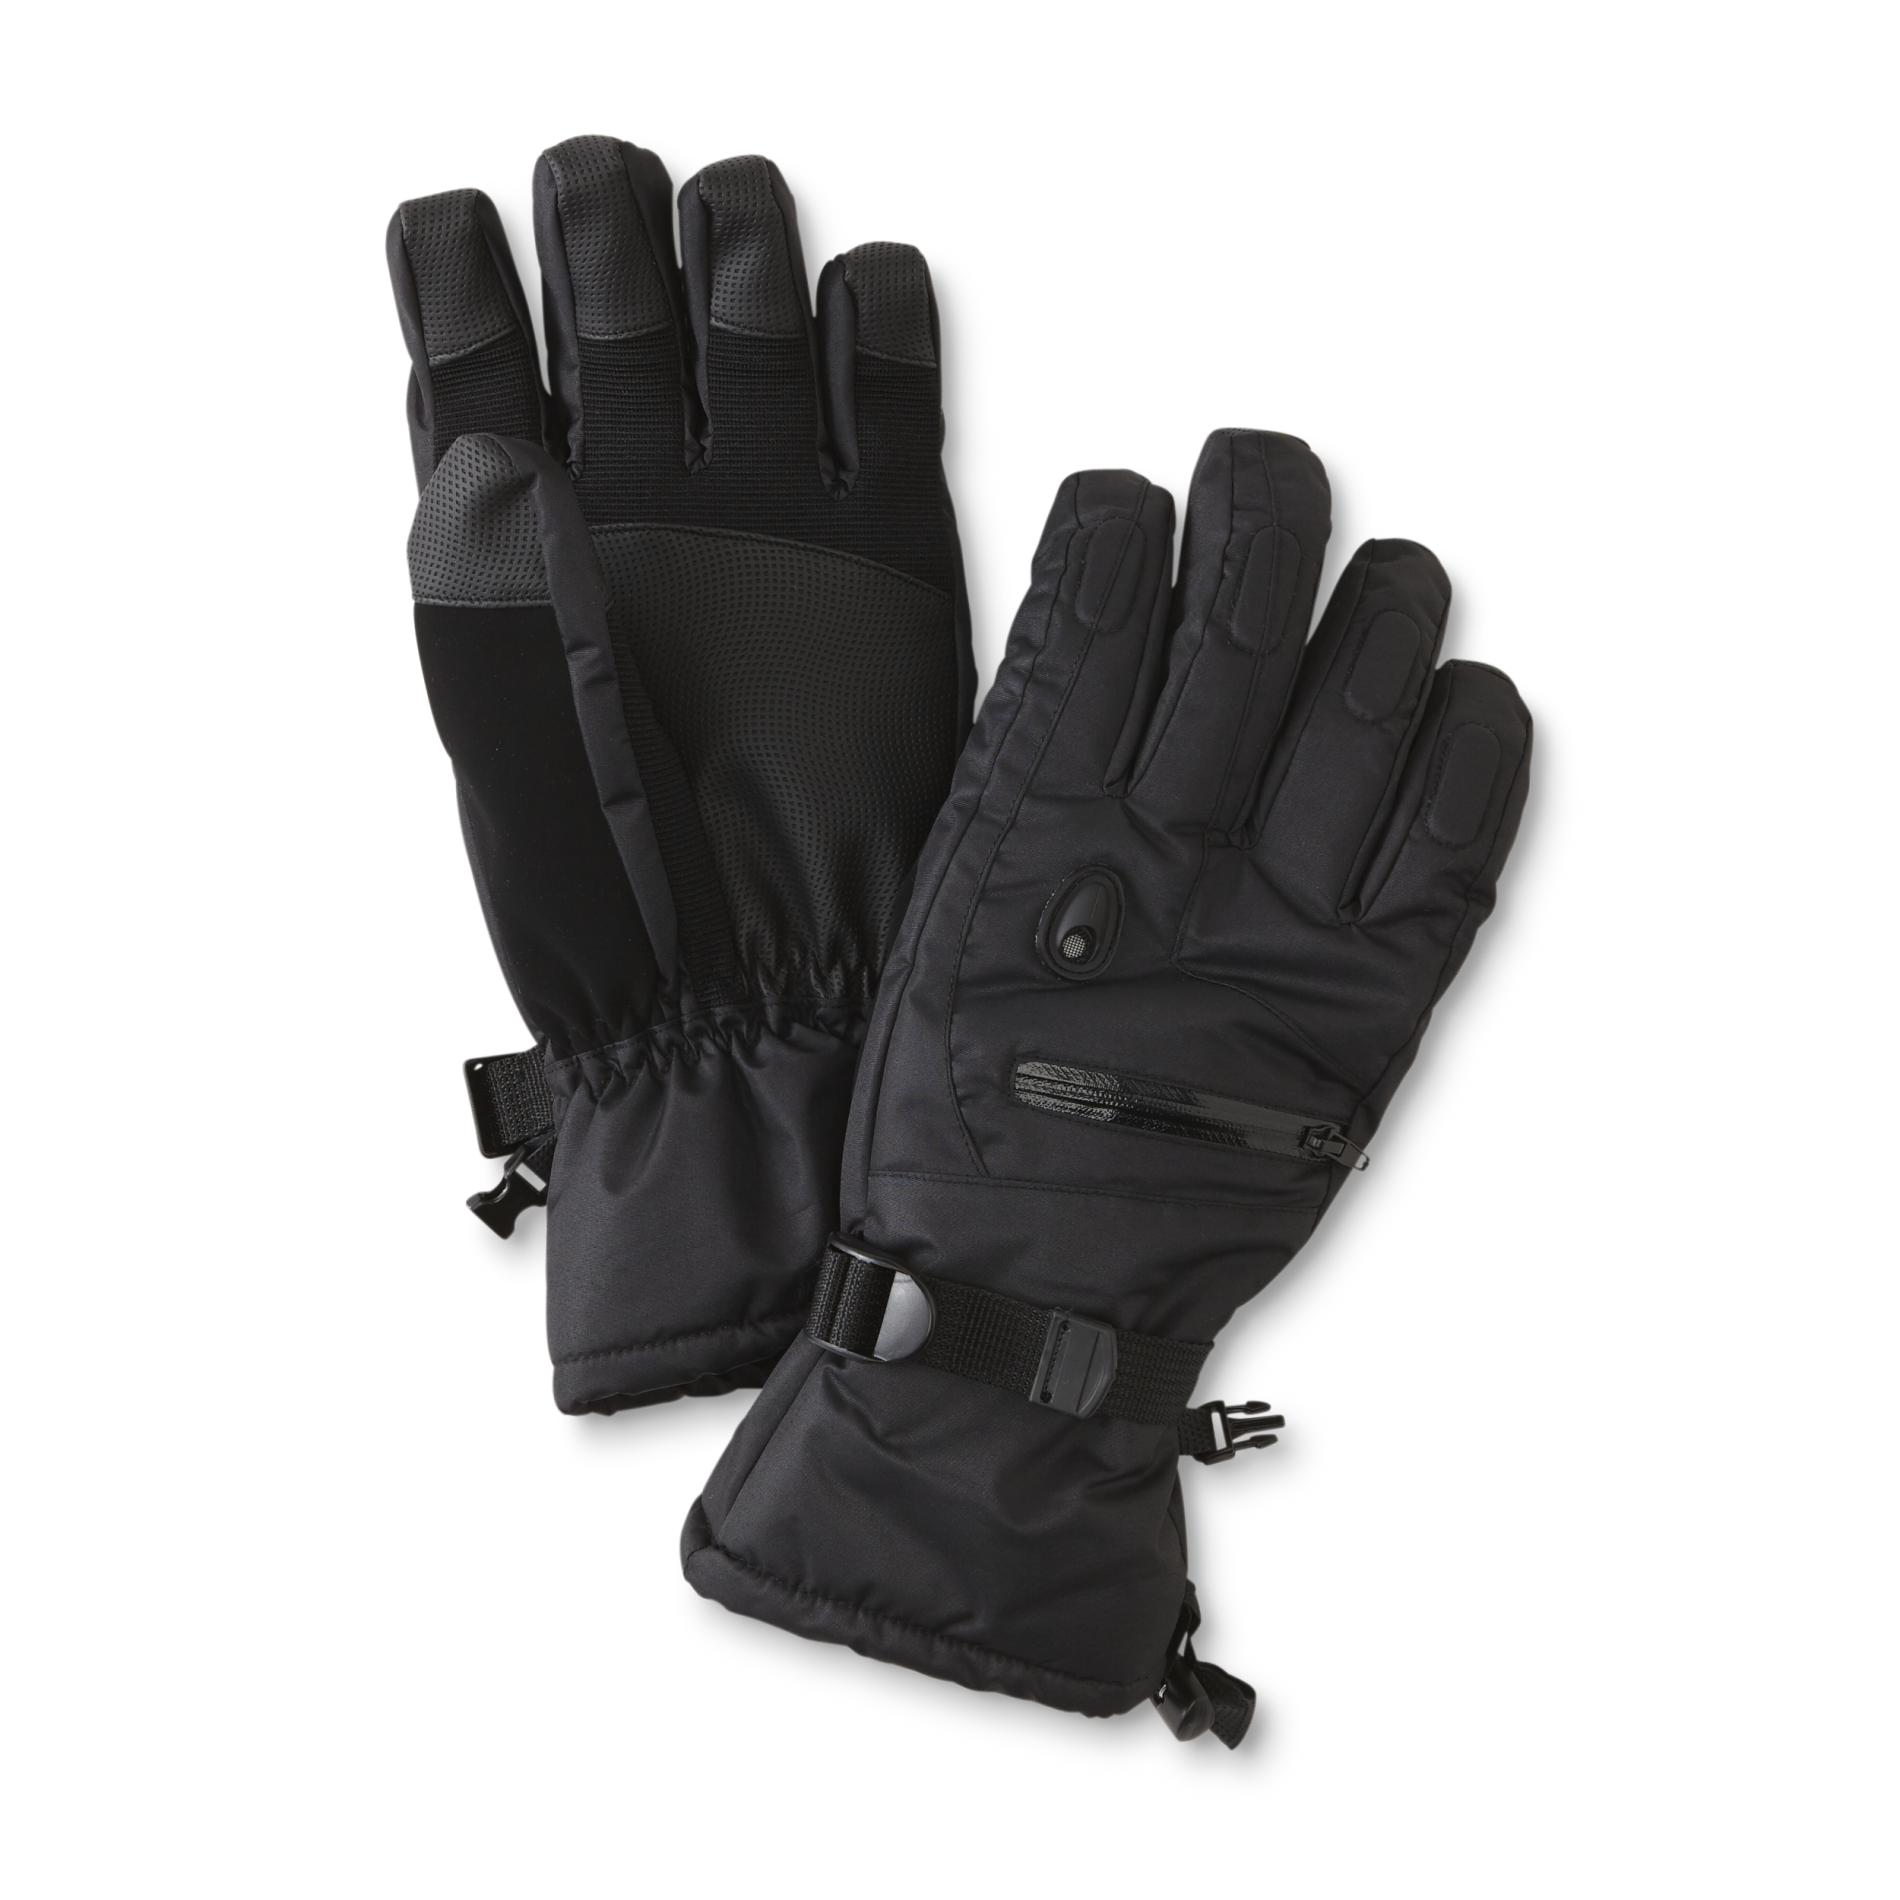 Athletech Men's Waterproof Ski Gloves